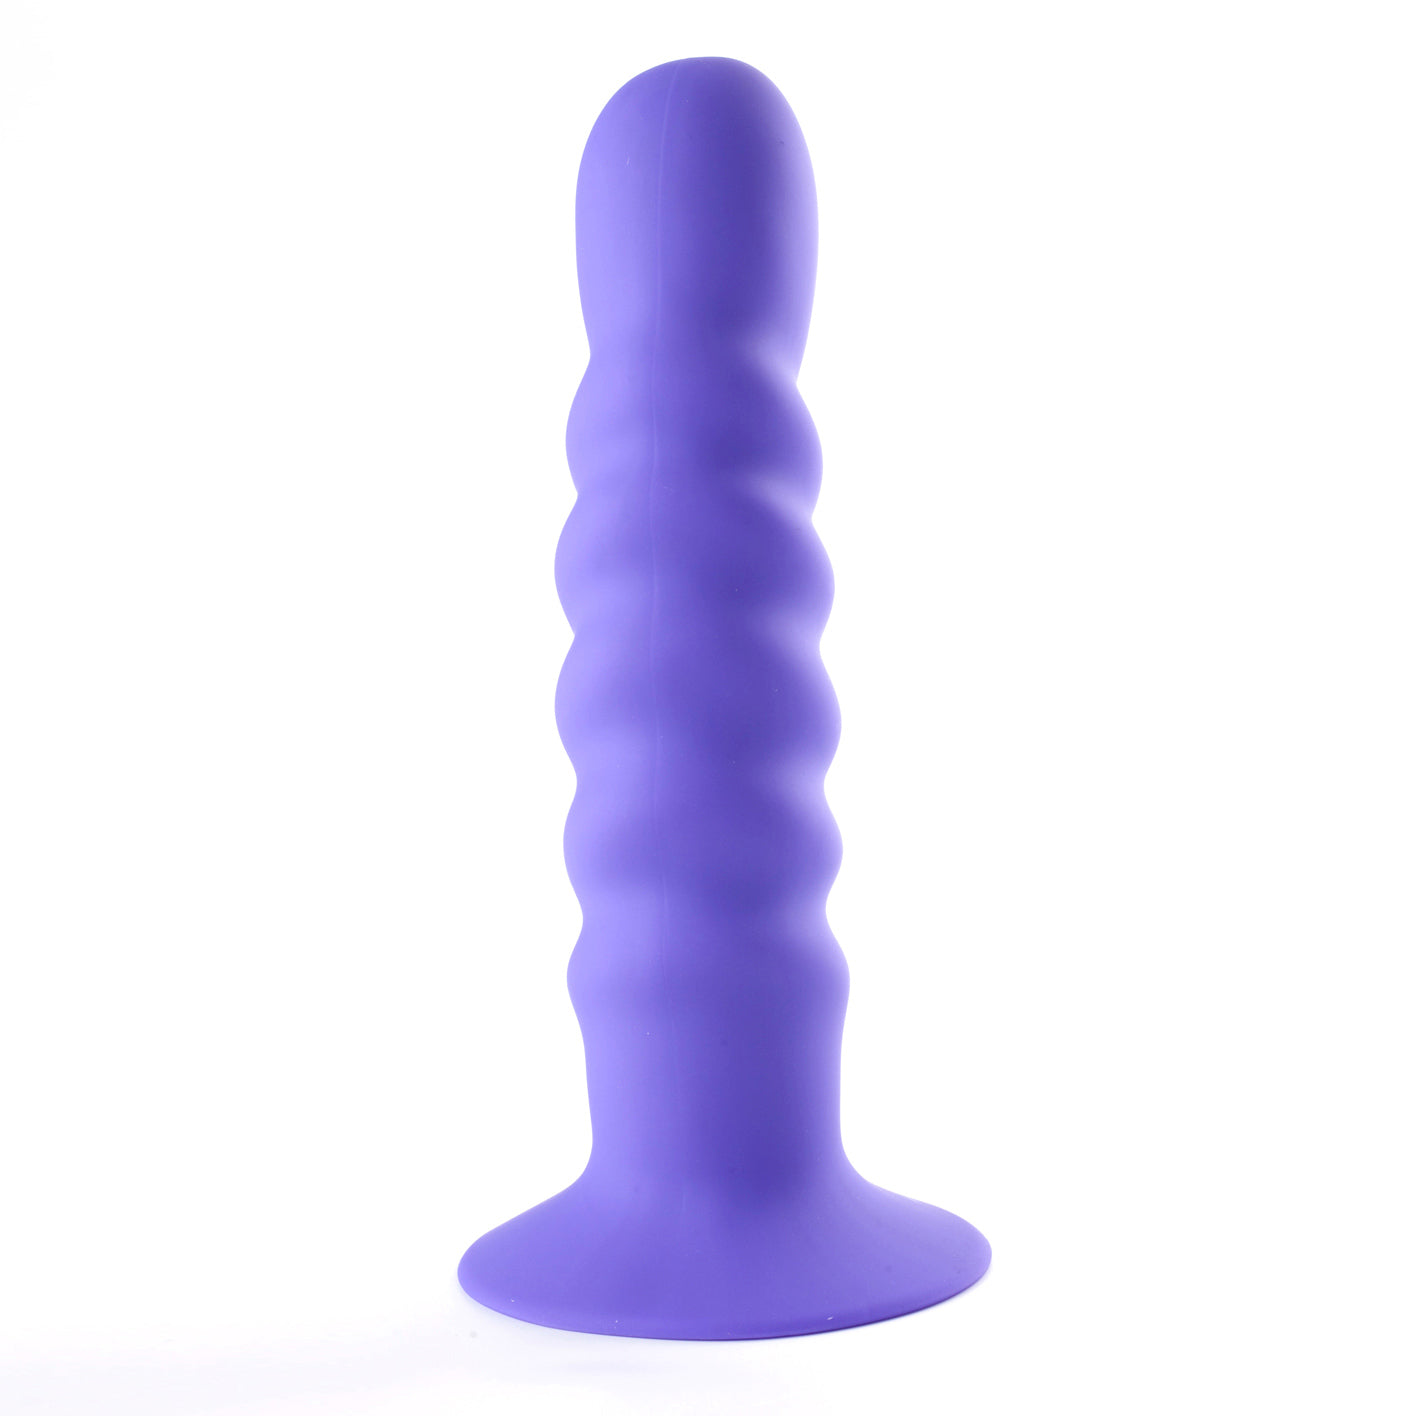 Kendall Silicone Dong Swirled Satin Finish - Neon  Purple